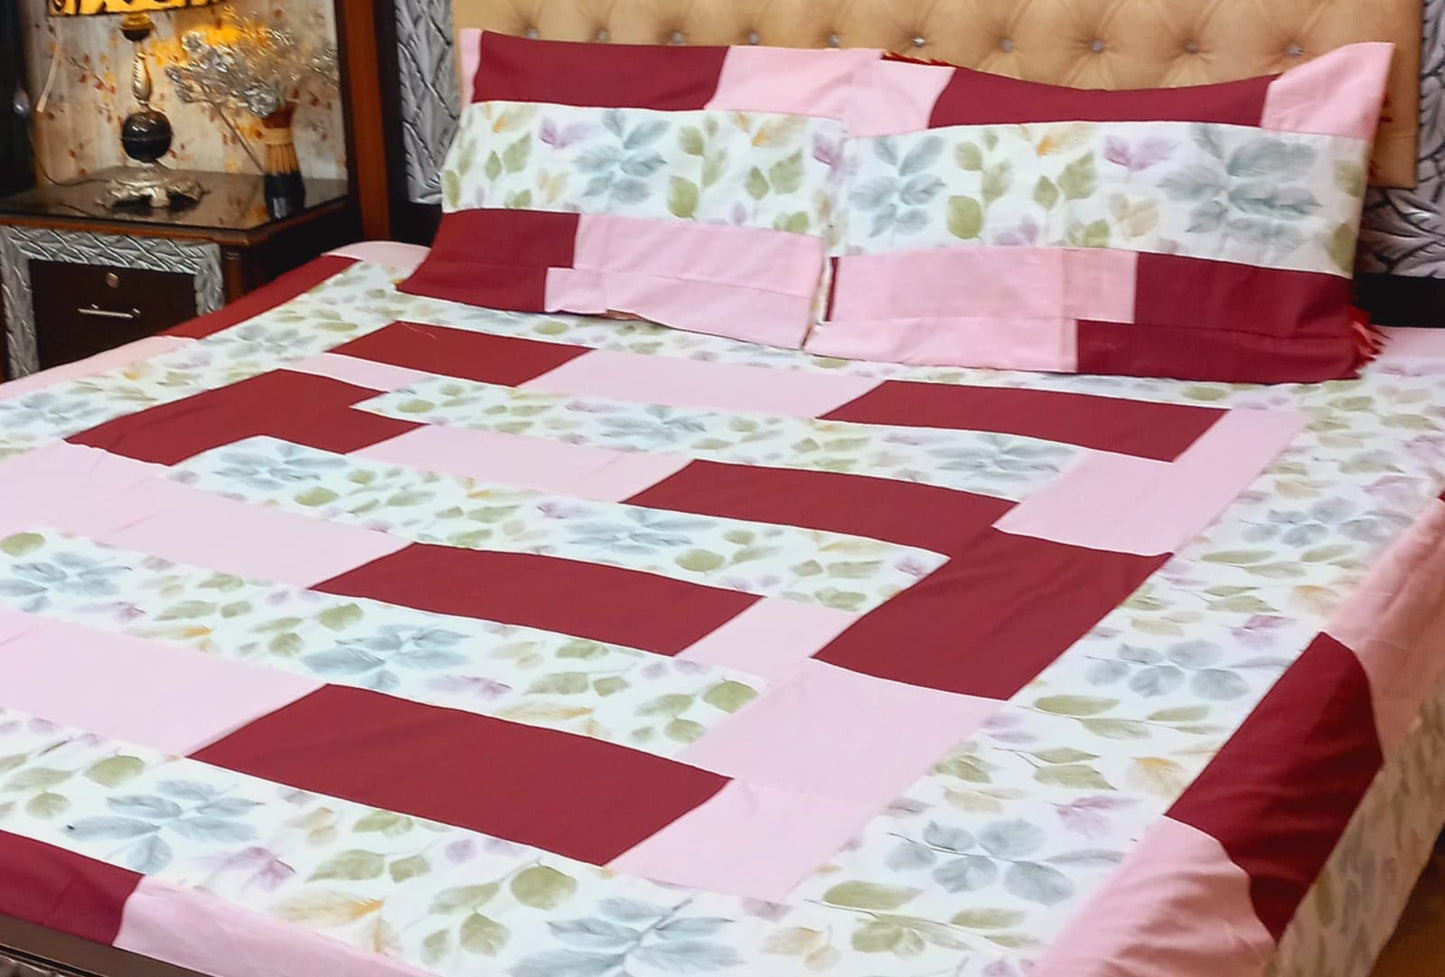 Exclusive Patchwork 3-Piece Bedsheets Set: King Size, Premium Quality Cotton/Satin/Percale Fabric